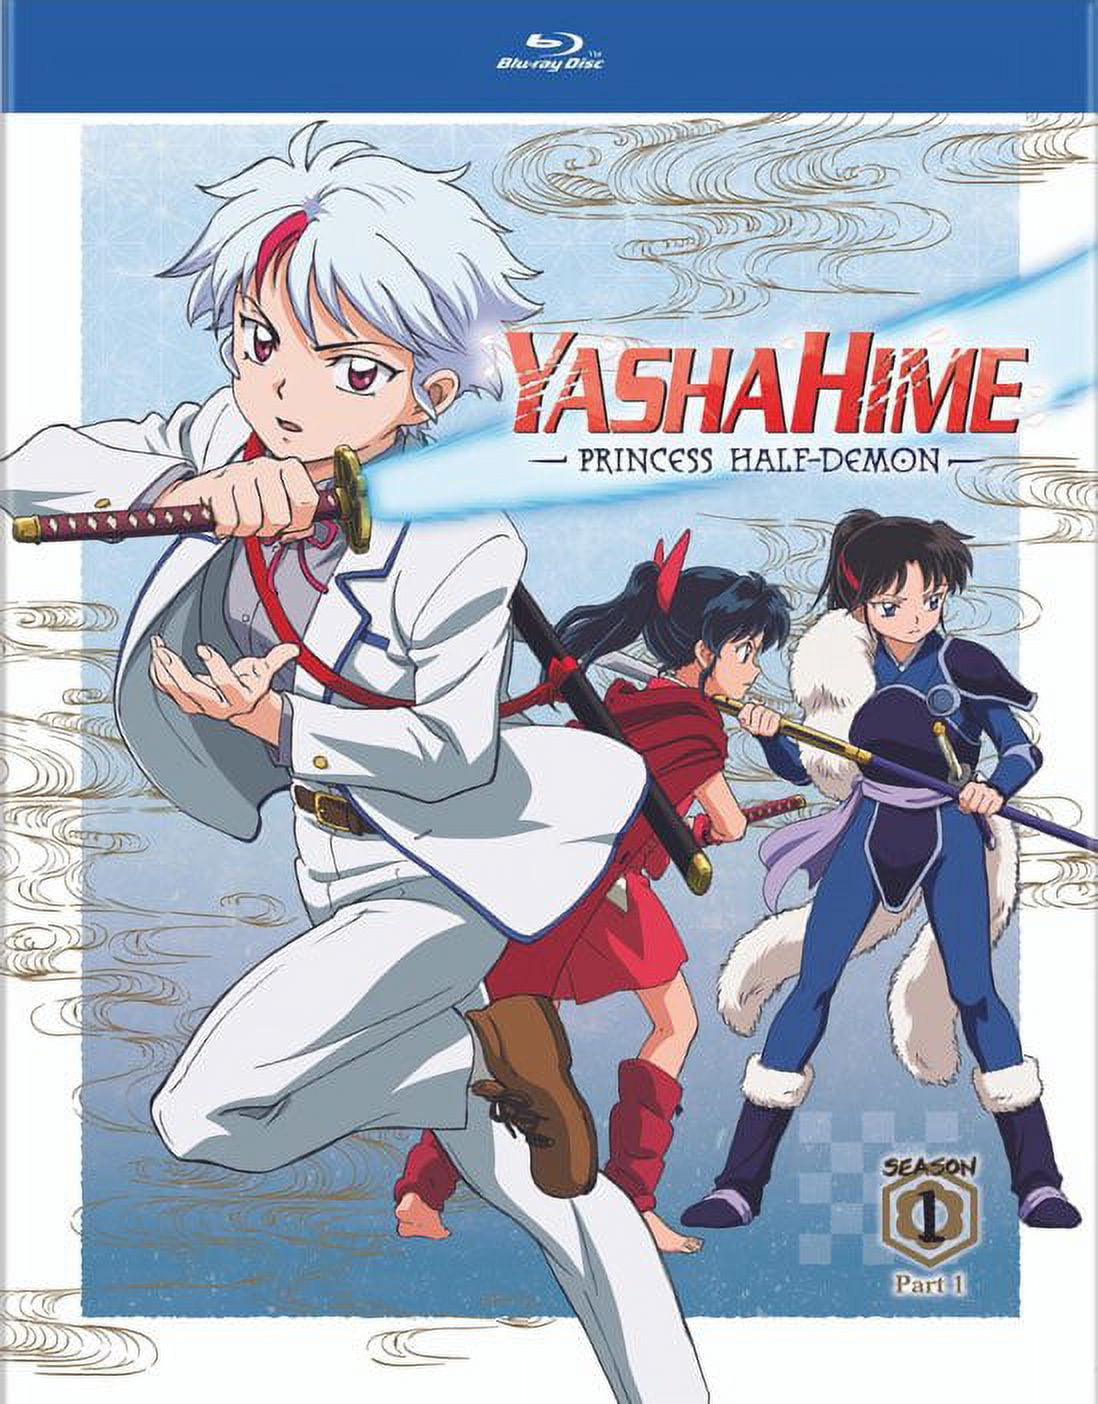 Watch Yashahime: Princess Half-Demon Streaming Online